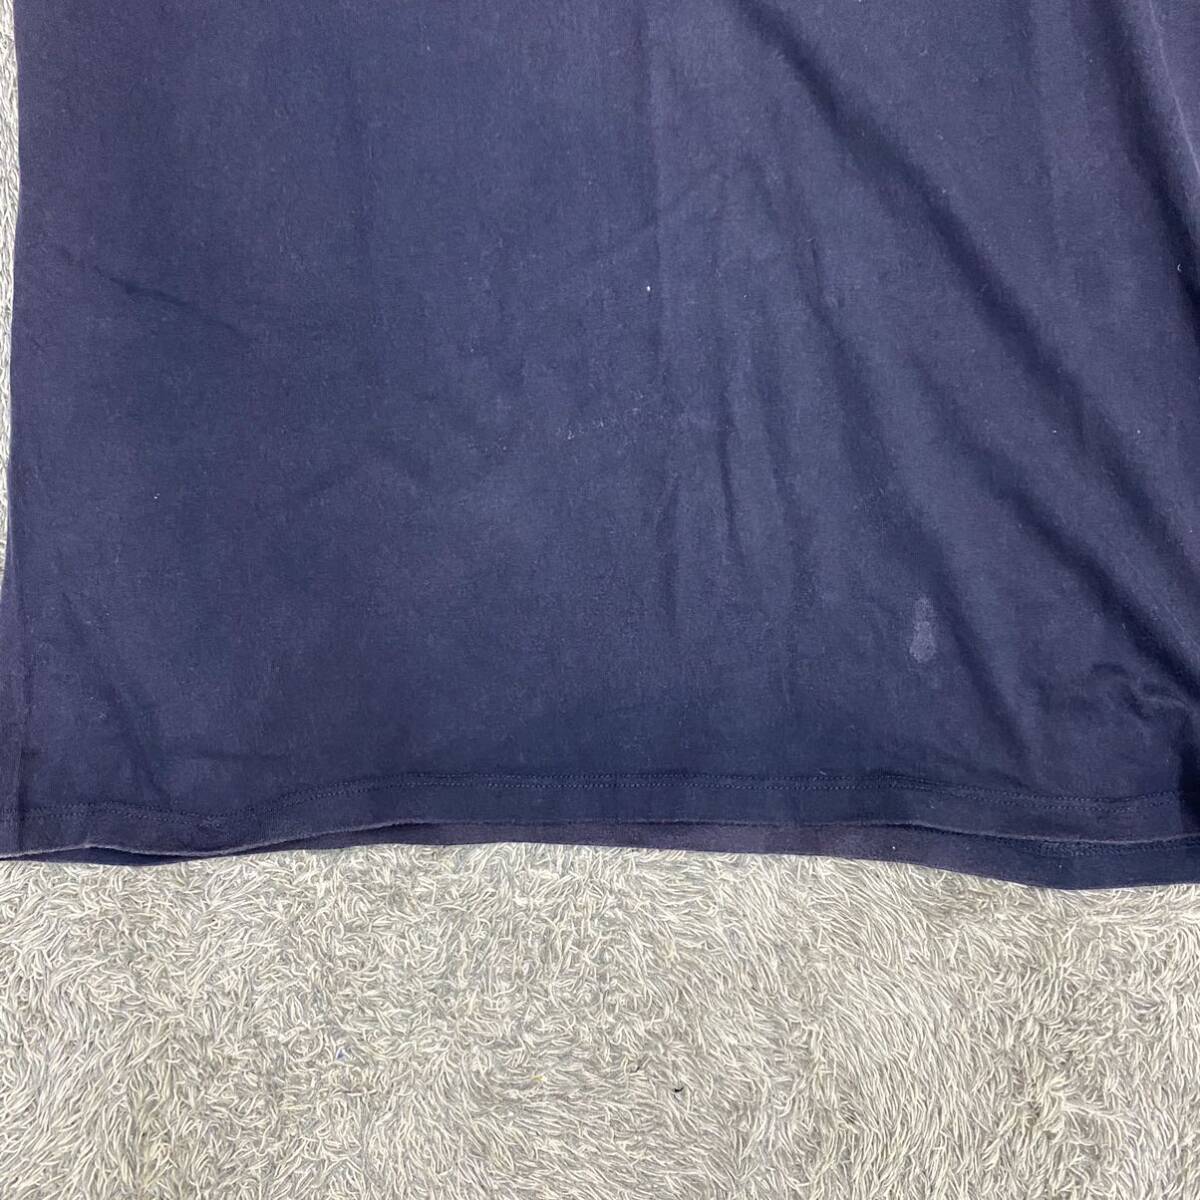 TOMMYHILFIGER トミーヒルフィガー Tシャツ 半袖カットソー サイズL ネイビー 紺色 メンズ トップス 最落なし （U18）の画像4